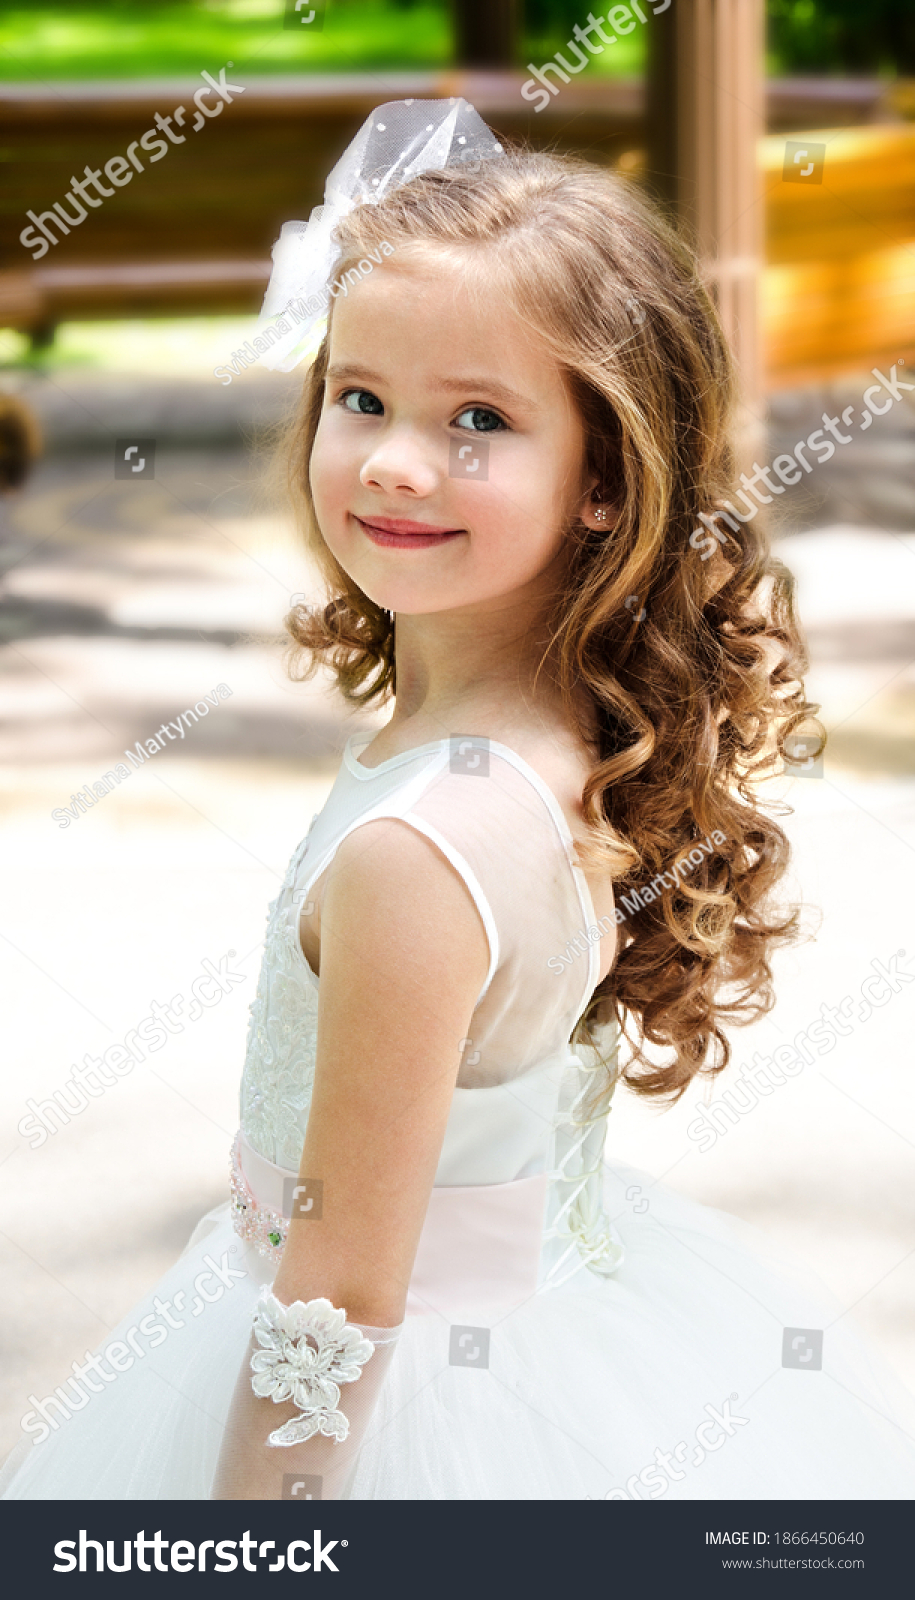 Adorable Smiling Little Girl Child Princess Stock Photo 1866450640 ...